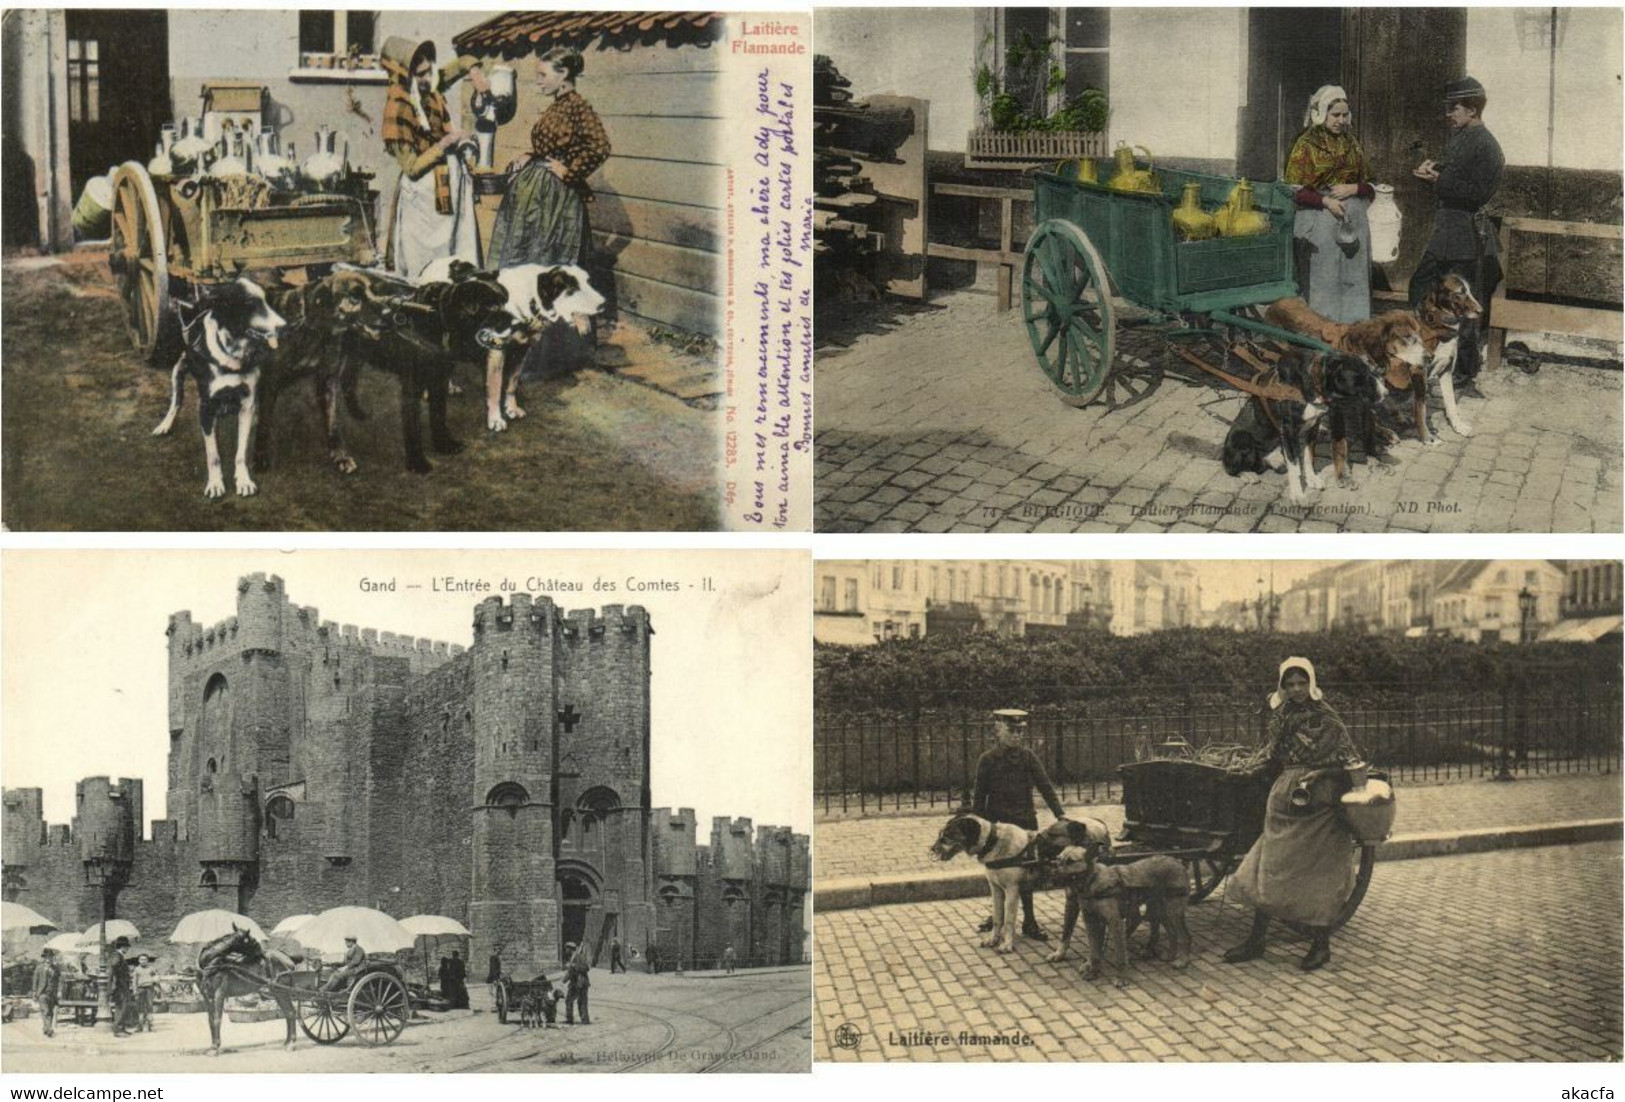 DOG CARTS BELGIUM With BETTER 51 Vintage Postcards Pre-1940 (L4315) - Sammlungen & Sammellose